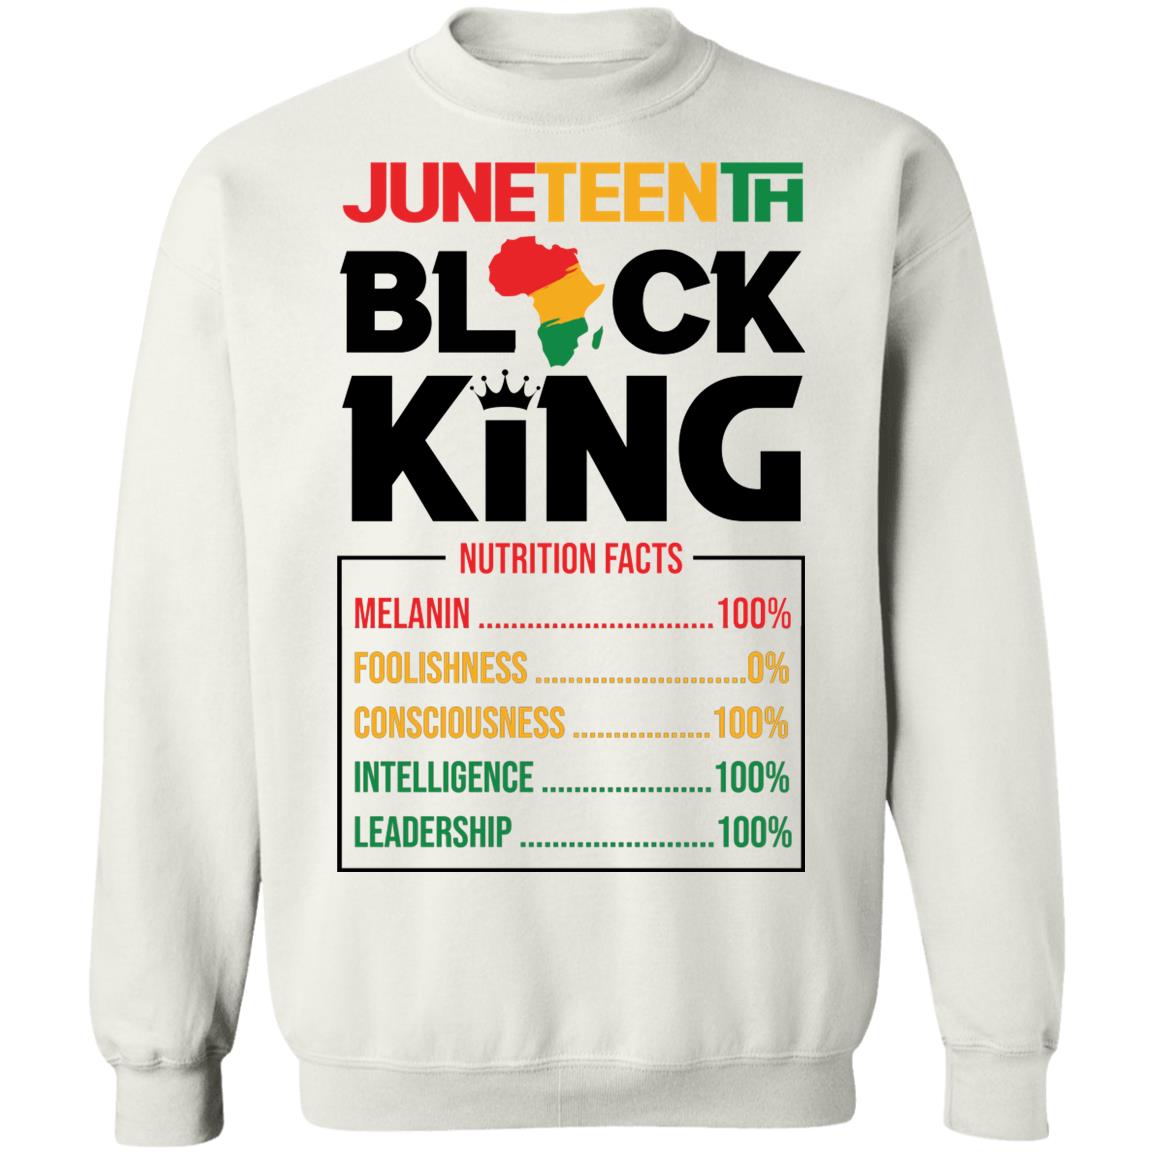 Juneteenth Black King Nutrition Facts T-shirt Apparel Gearment Crewneck Sweatshirt White S